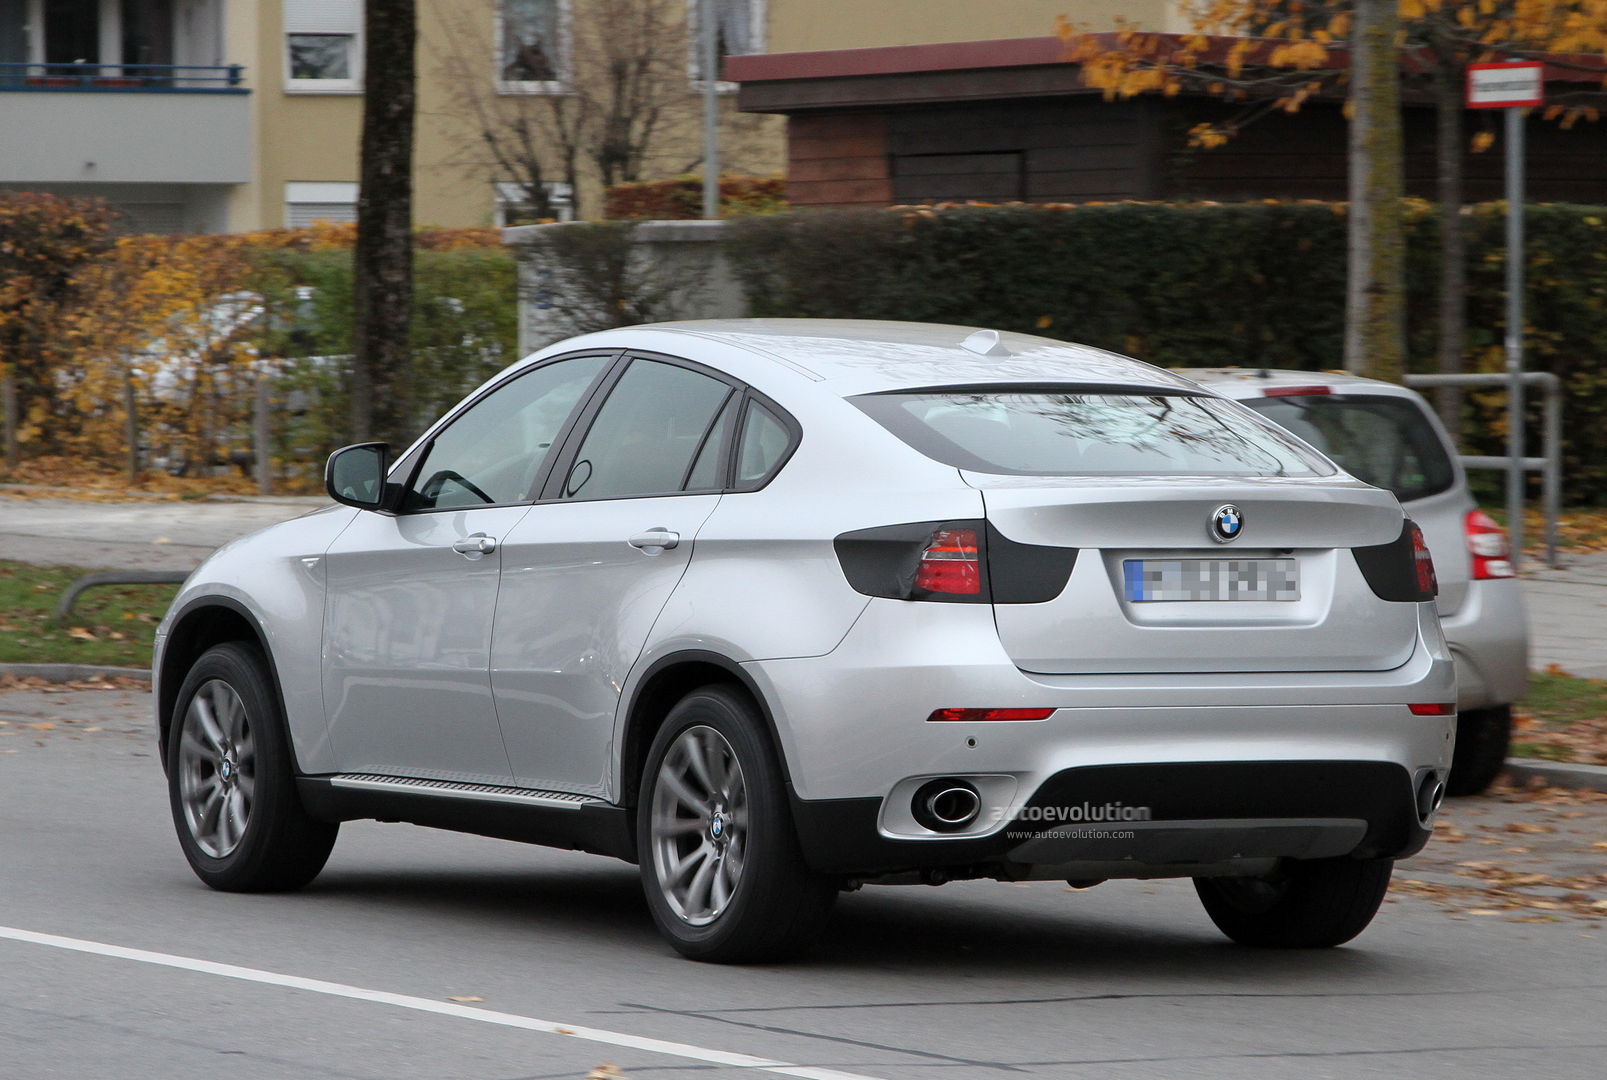 BMW X6 facelift spied